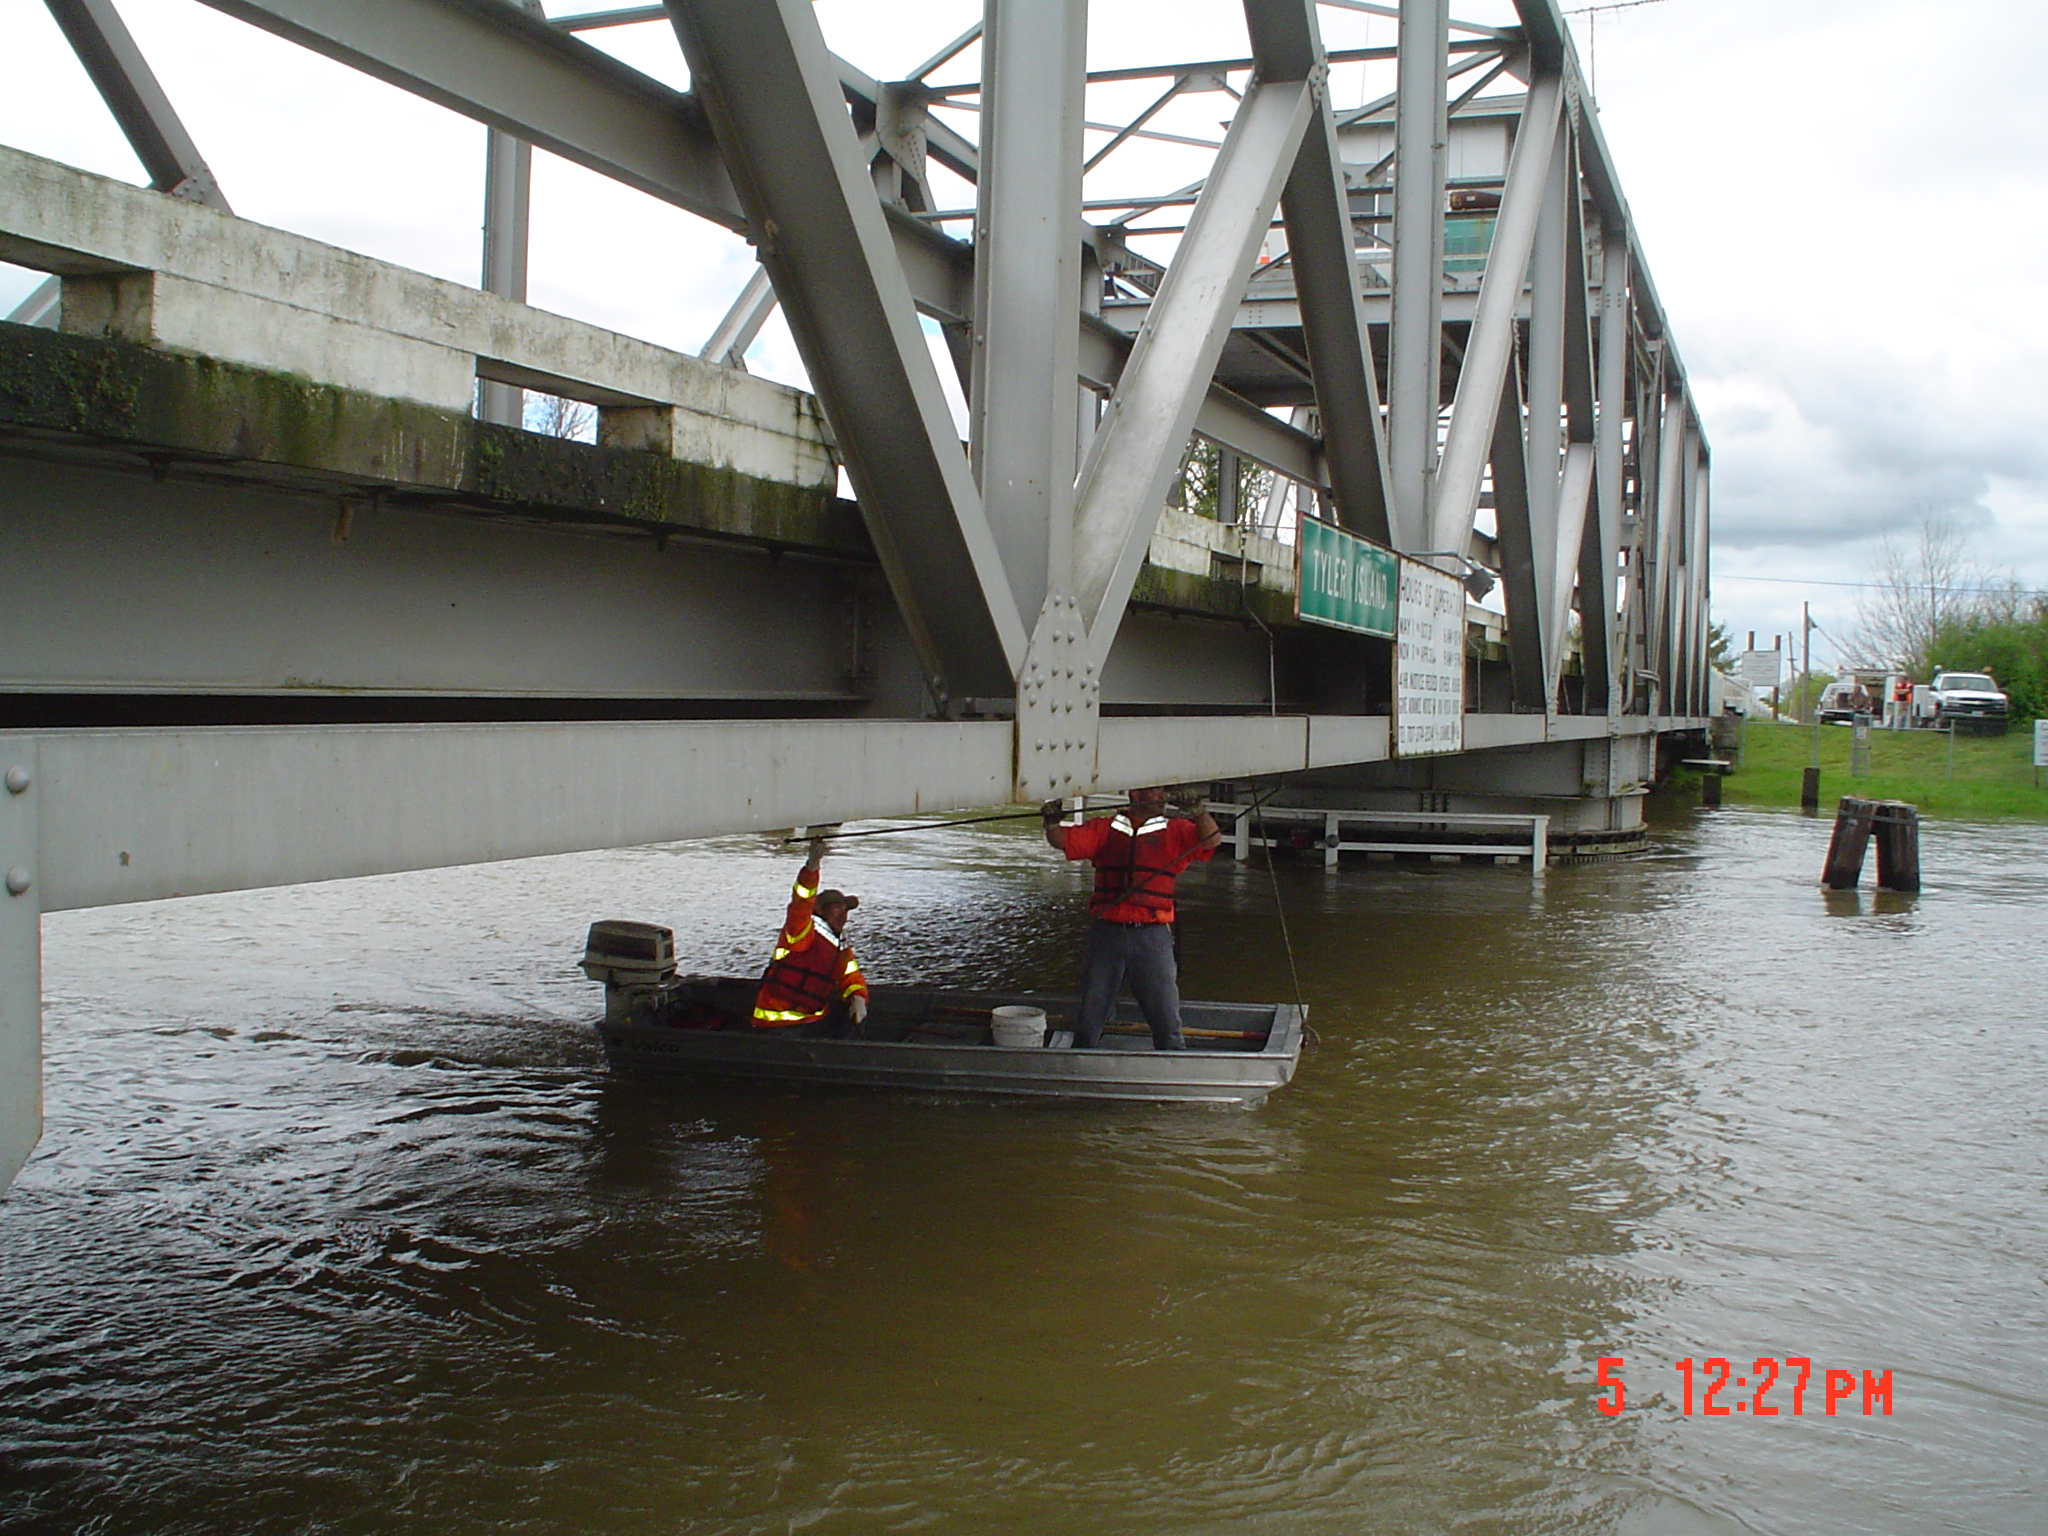 Bridge maintenance work using small boat.